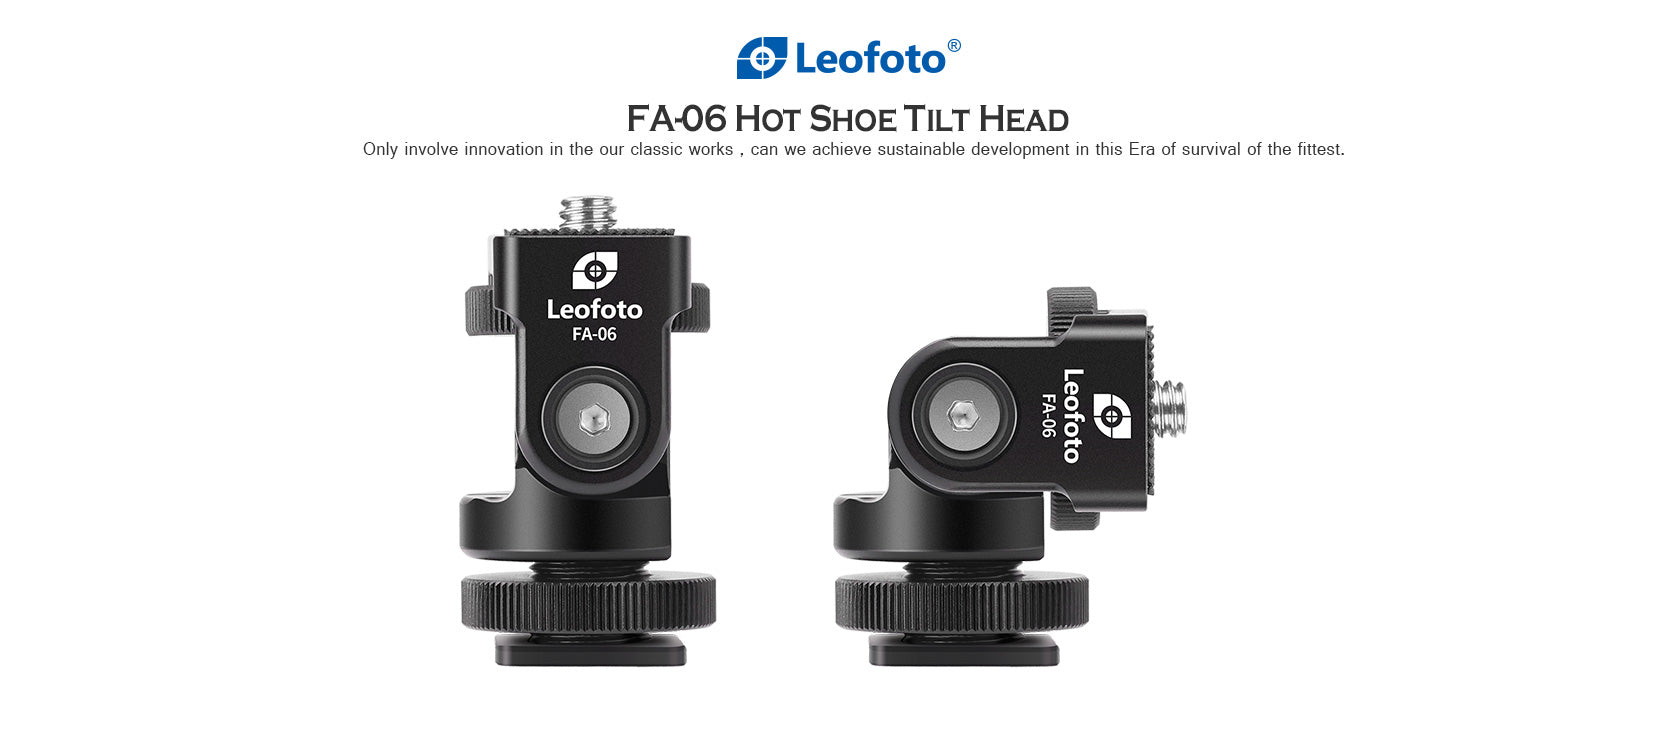 Leofoto FA-06 Hot Shoe Tilt Head Adapter with Friction Control